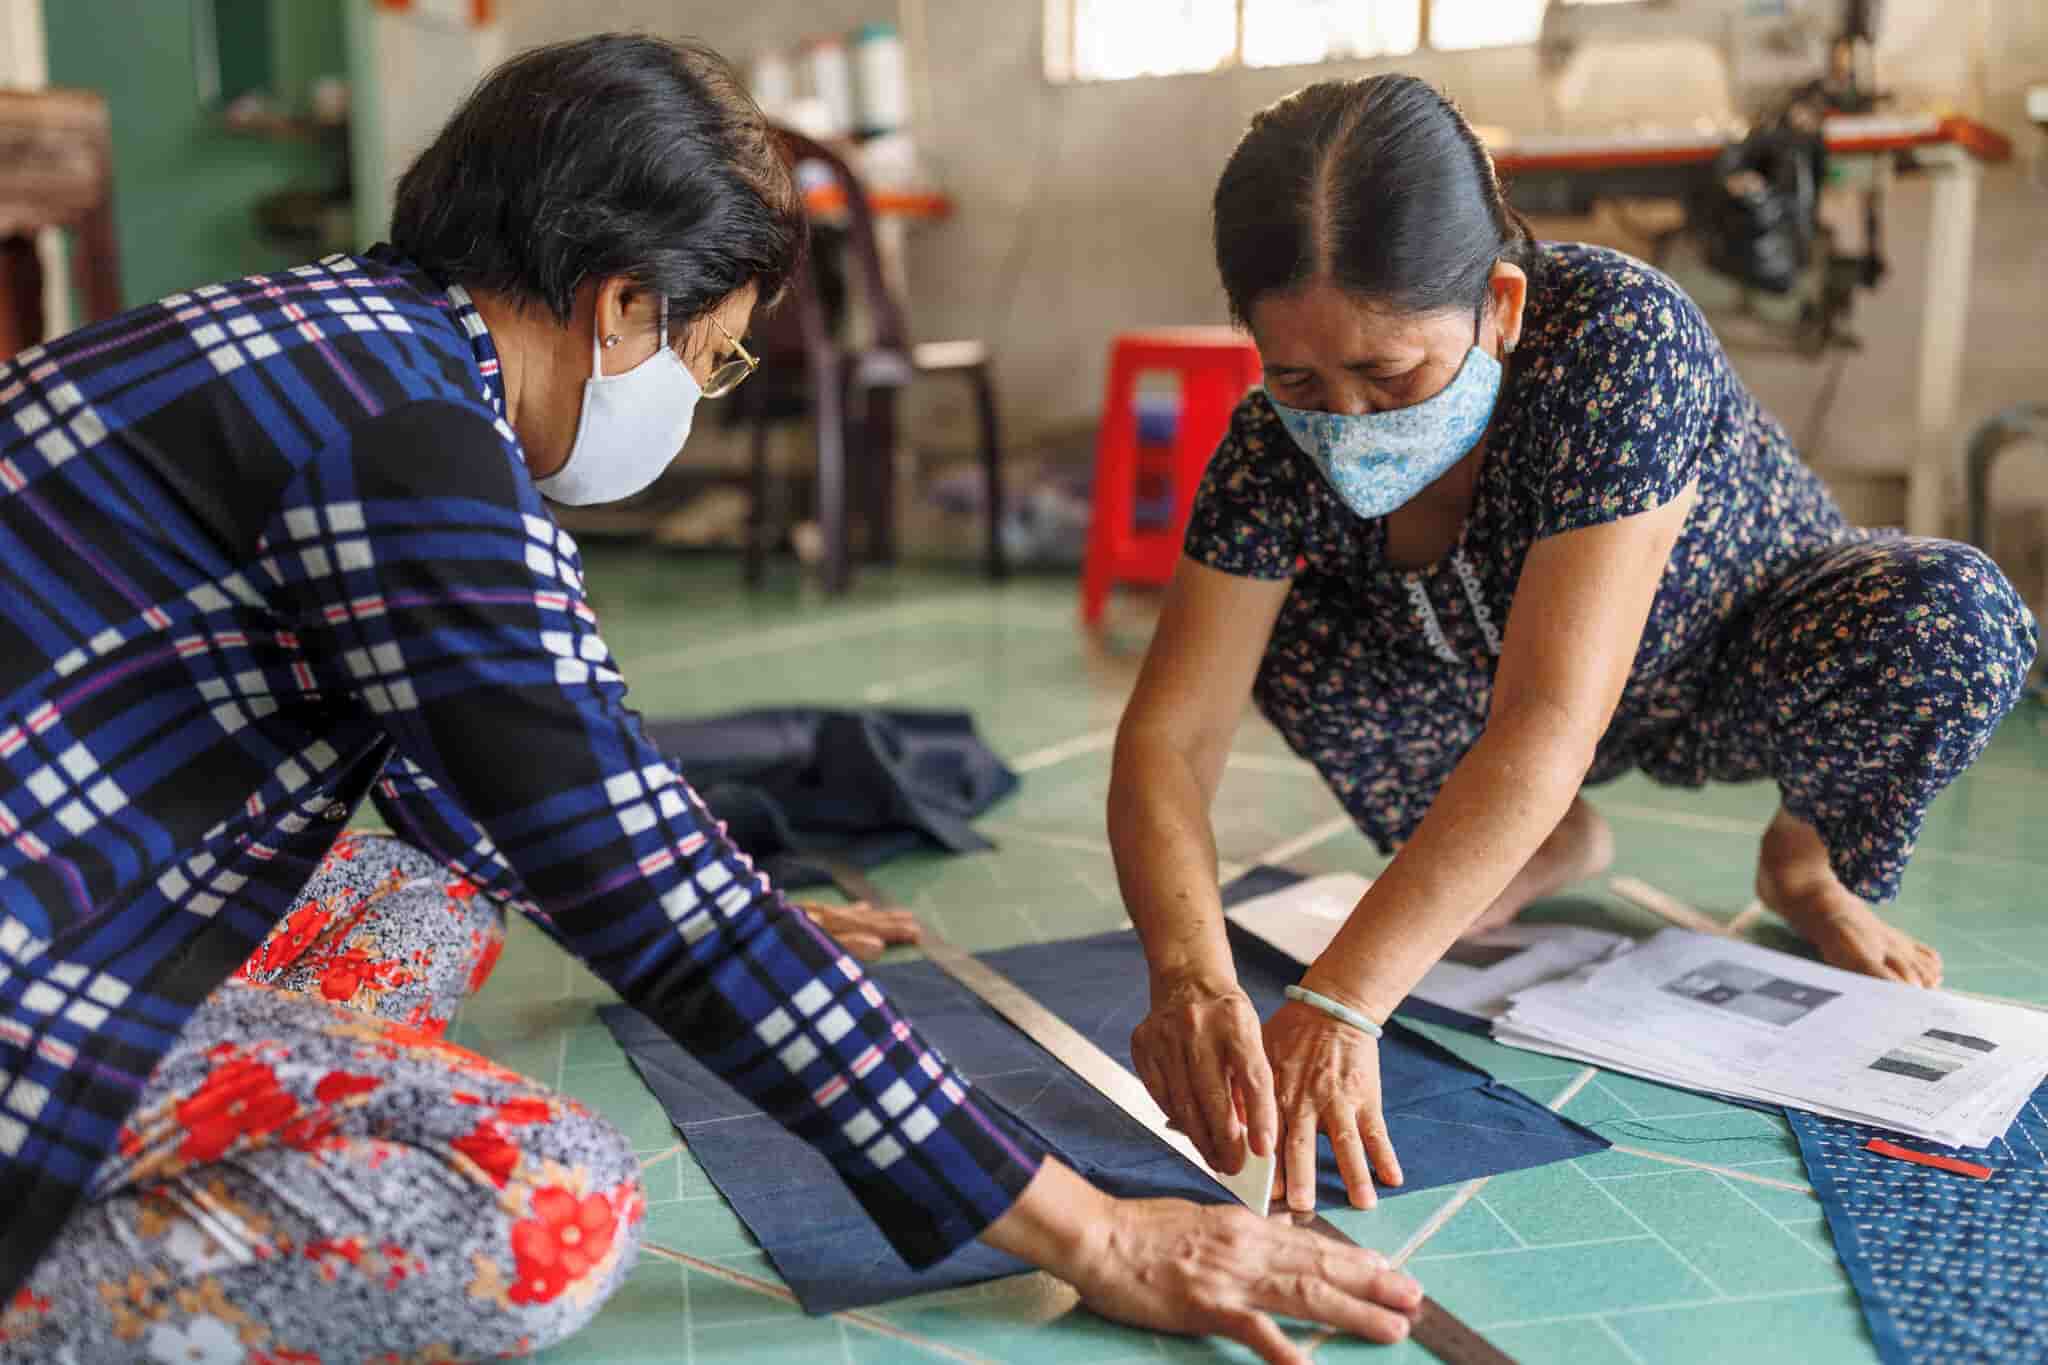 Phan Thị Nga and Chiêm Thị Bé work on a quilt for social enterprise Mekong Quilts. Photo by Mervin Lee